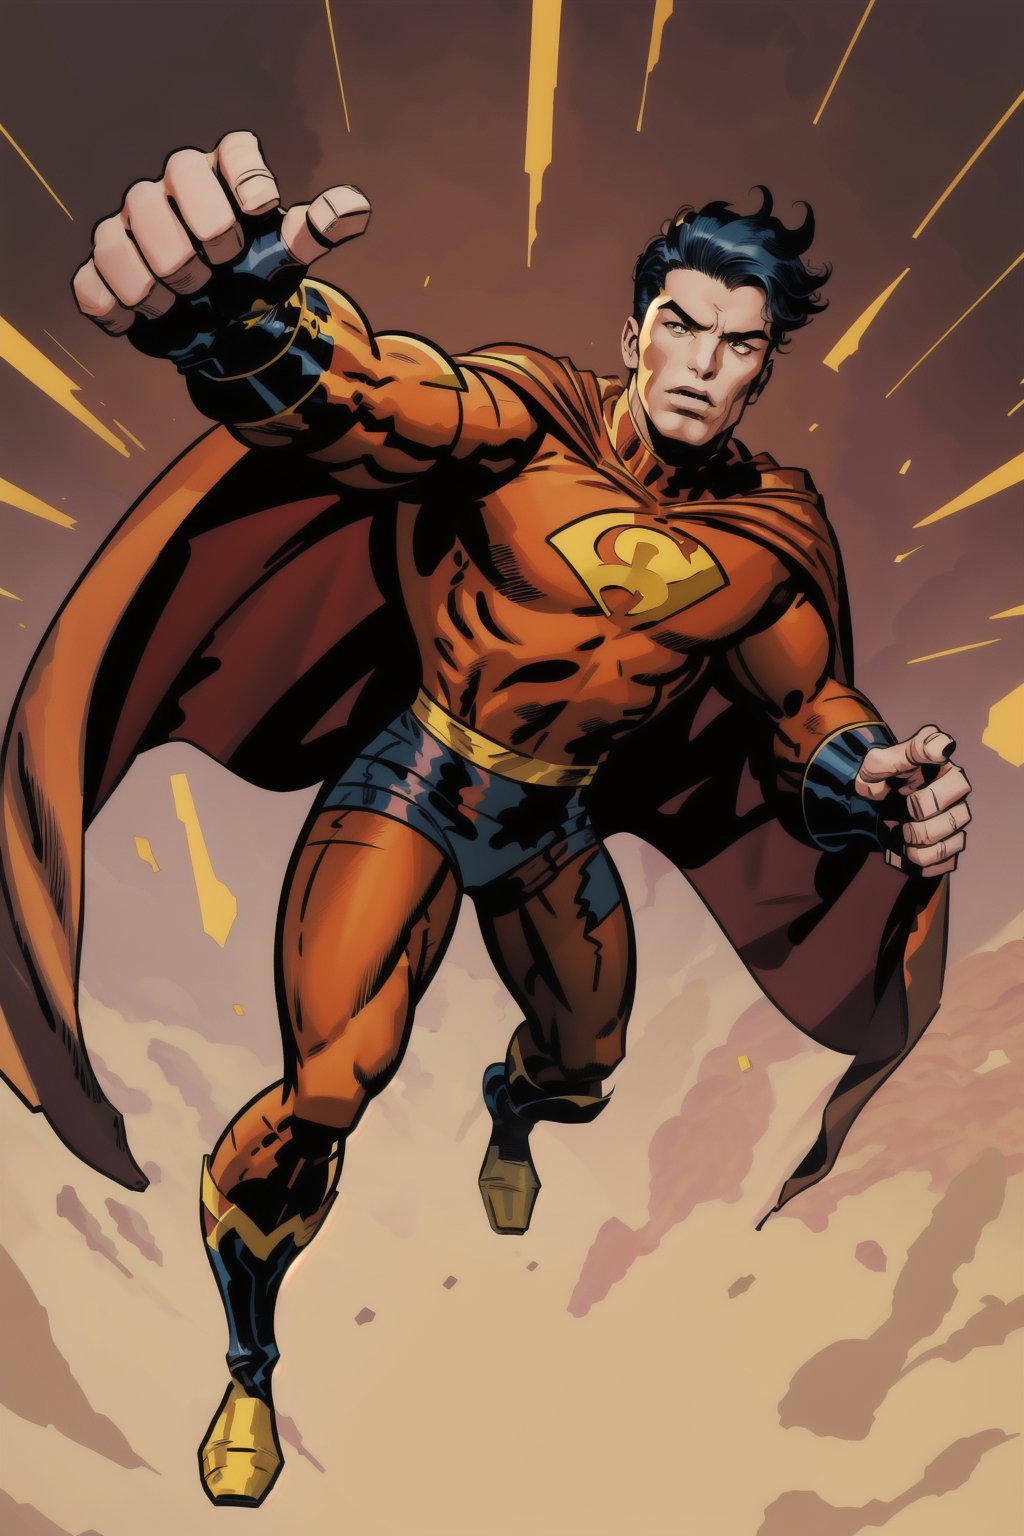 Full body,1man, superhero, flying, red and yellow superhero costume with cape,cartoon